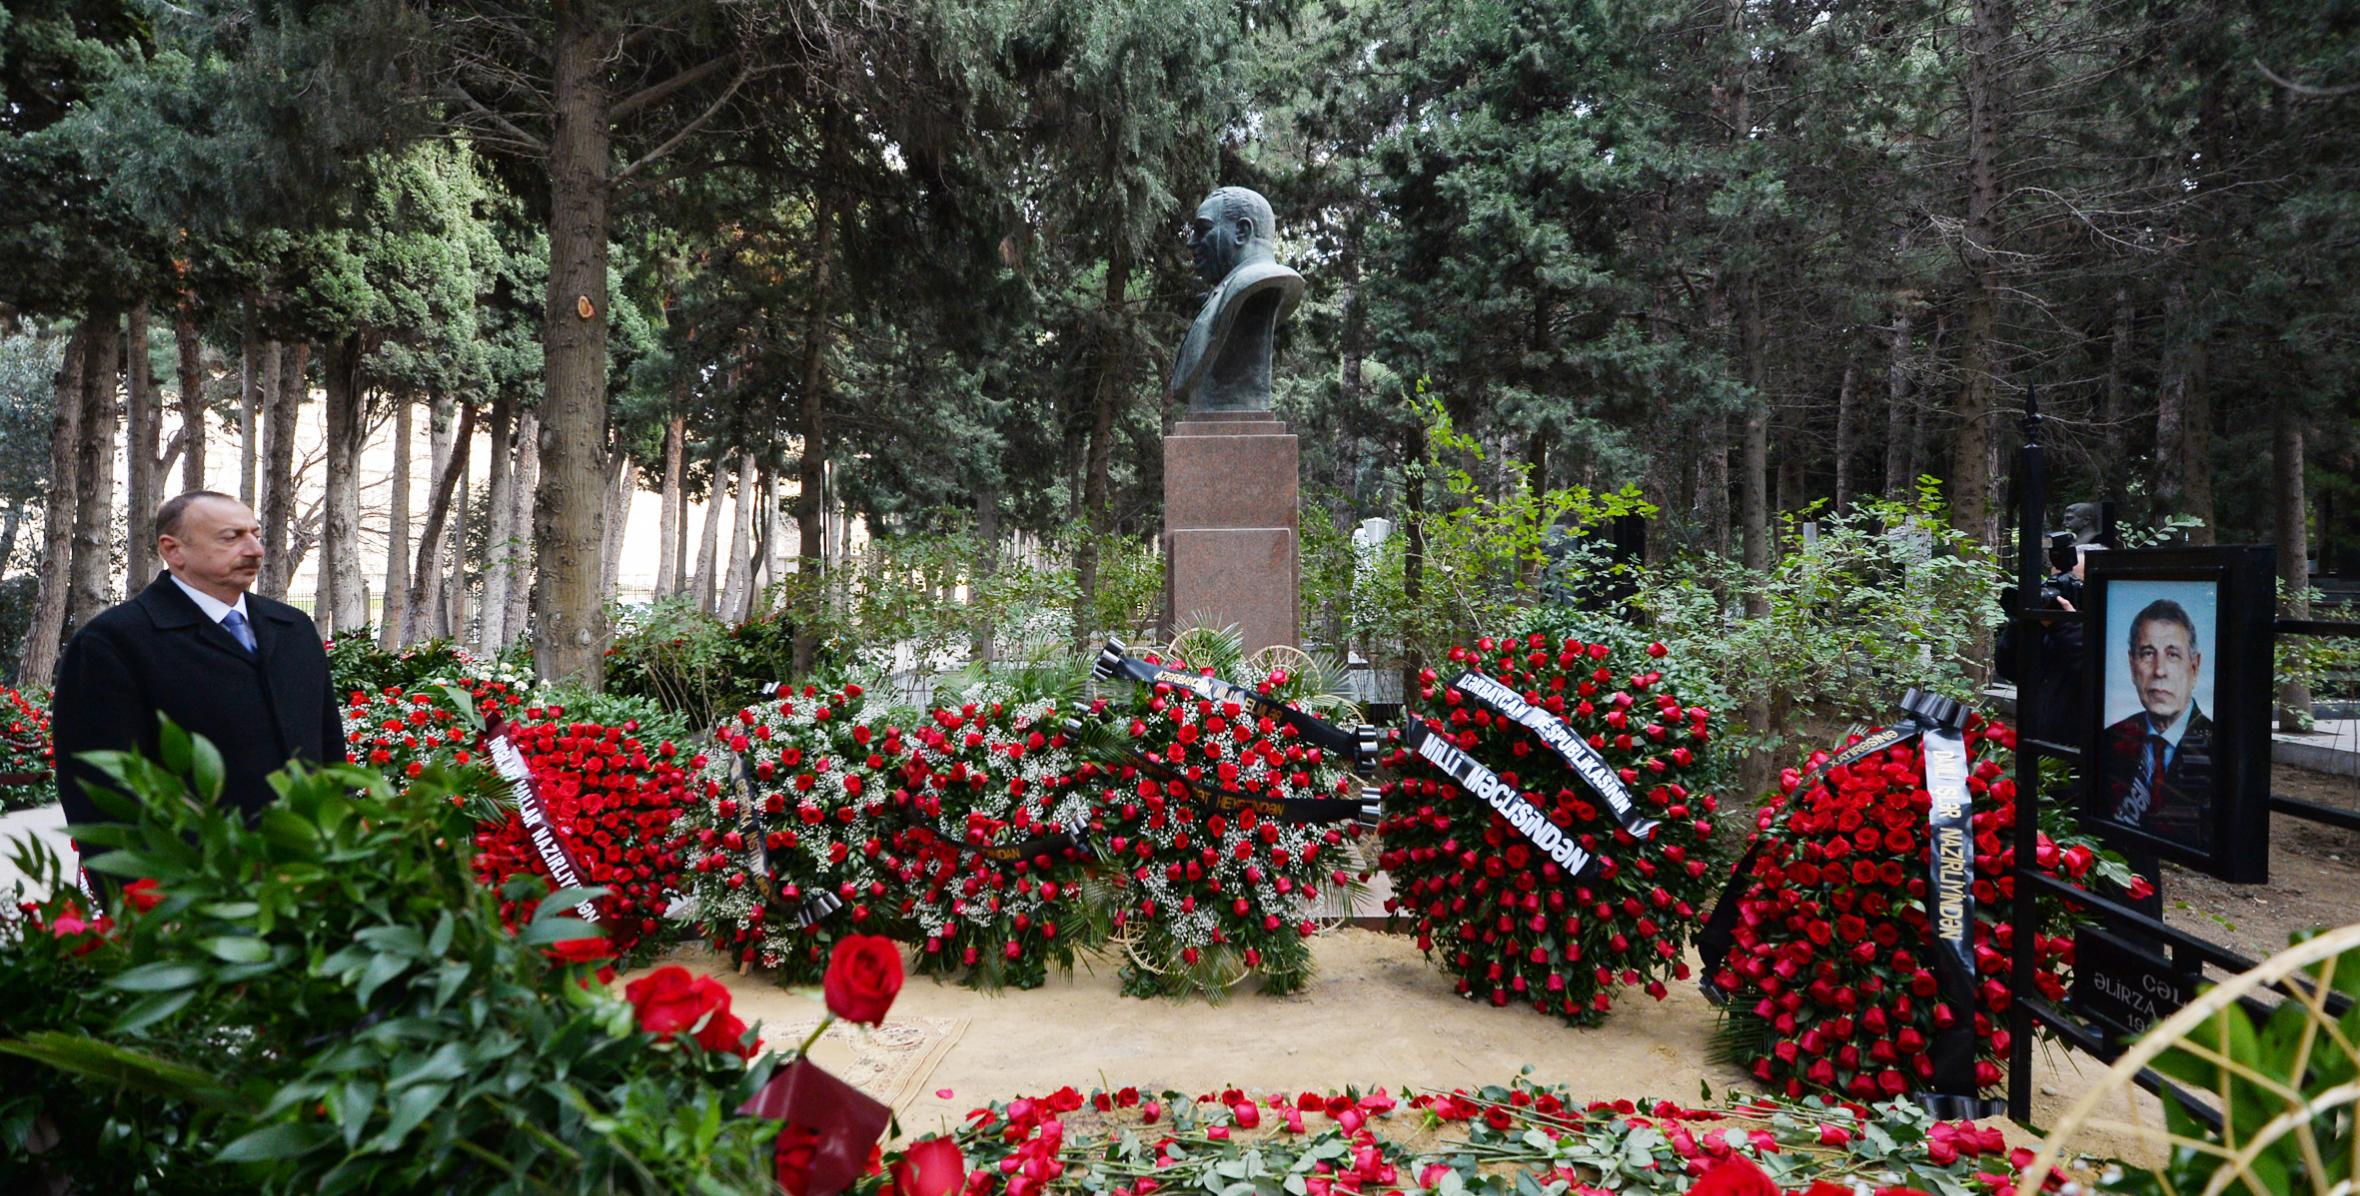 Ilham Aliyev visited the grave of academician Jalal Aliyev